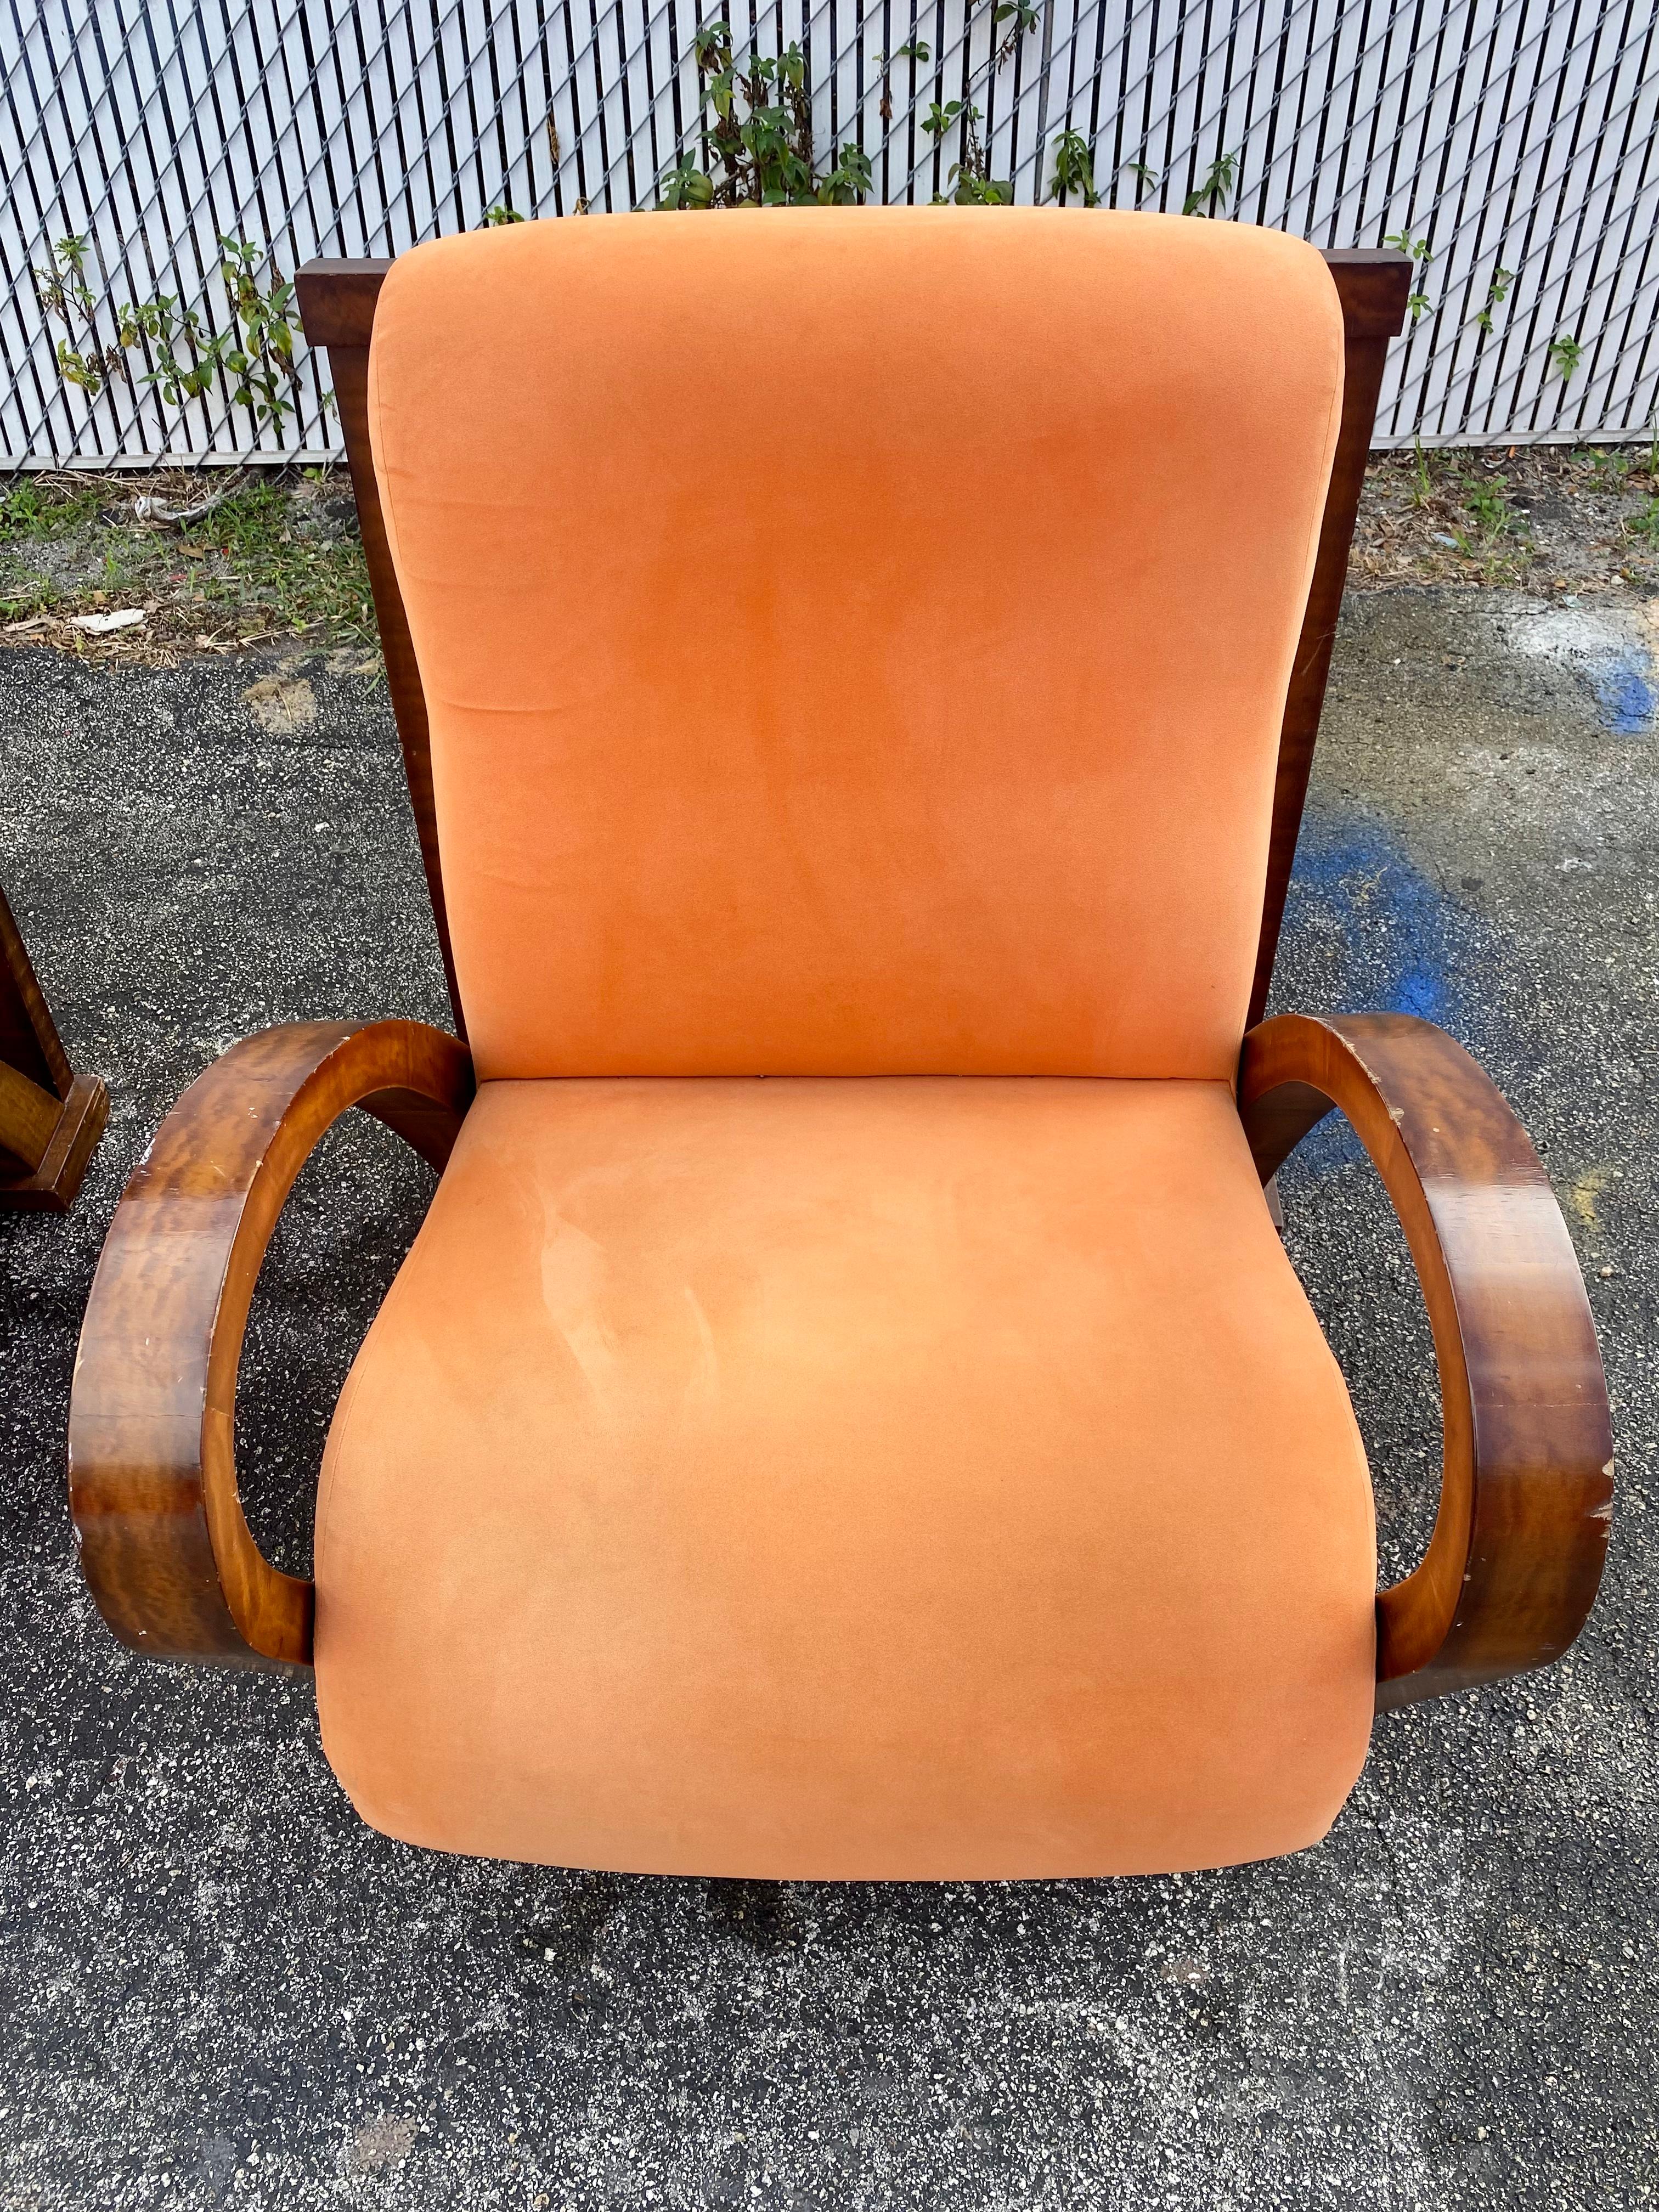 1930s Walnut Orange Art Deco Bentwood Chairs, Set of 2 For Sale 1